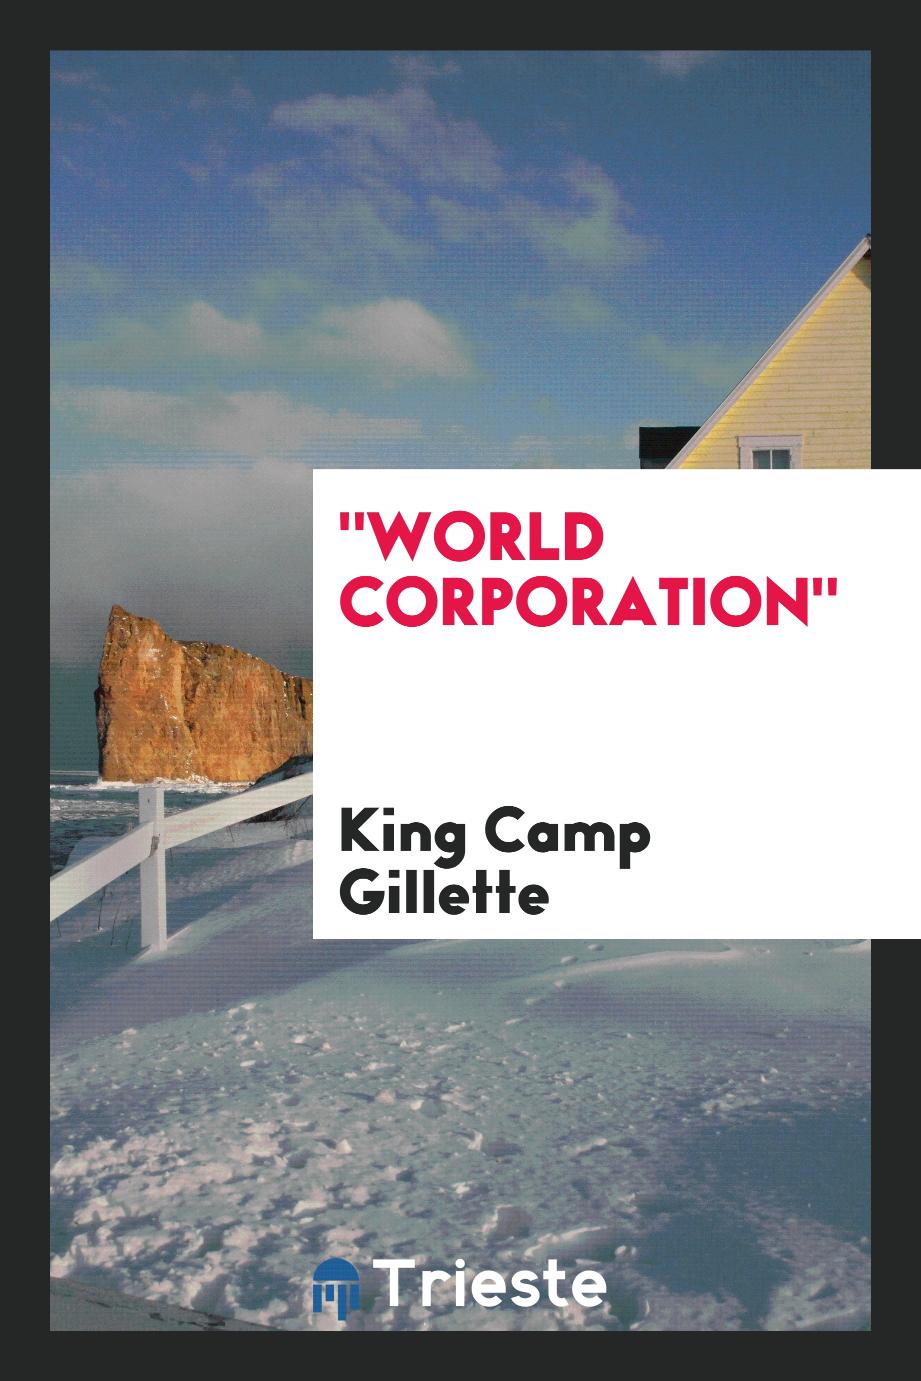 "World corporation"